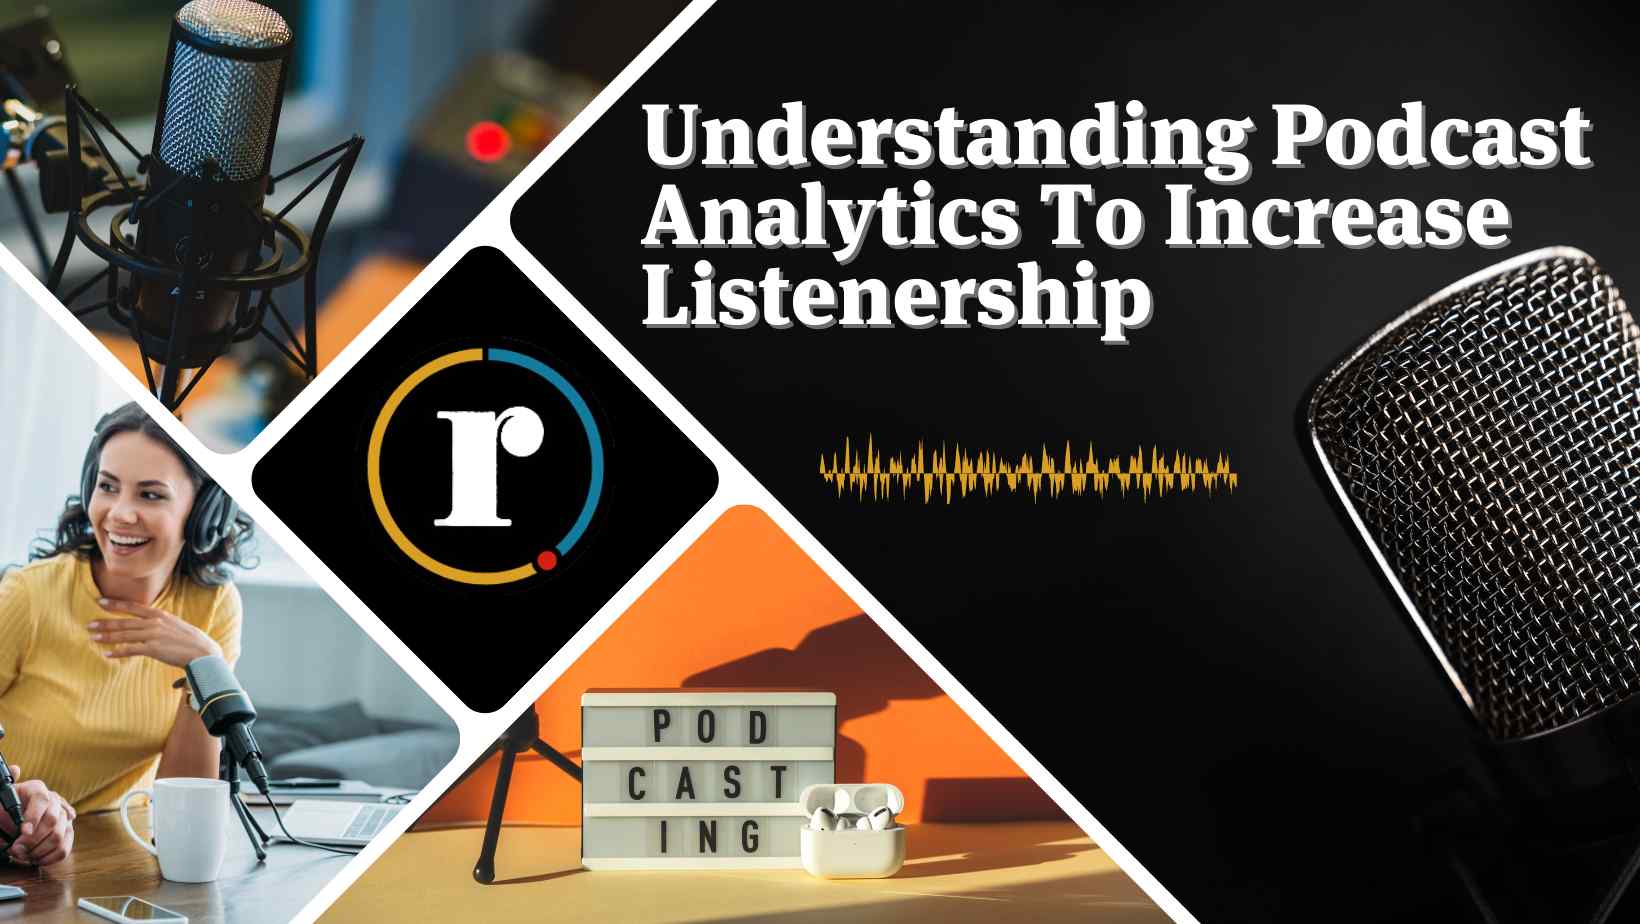 Understand Podcast Analytics To Increase Listenership